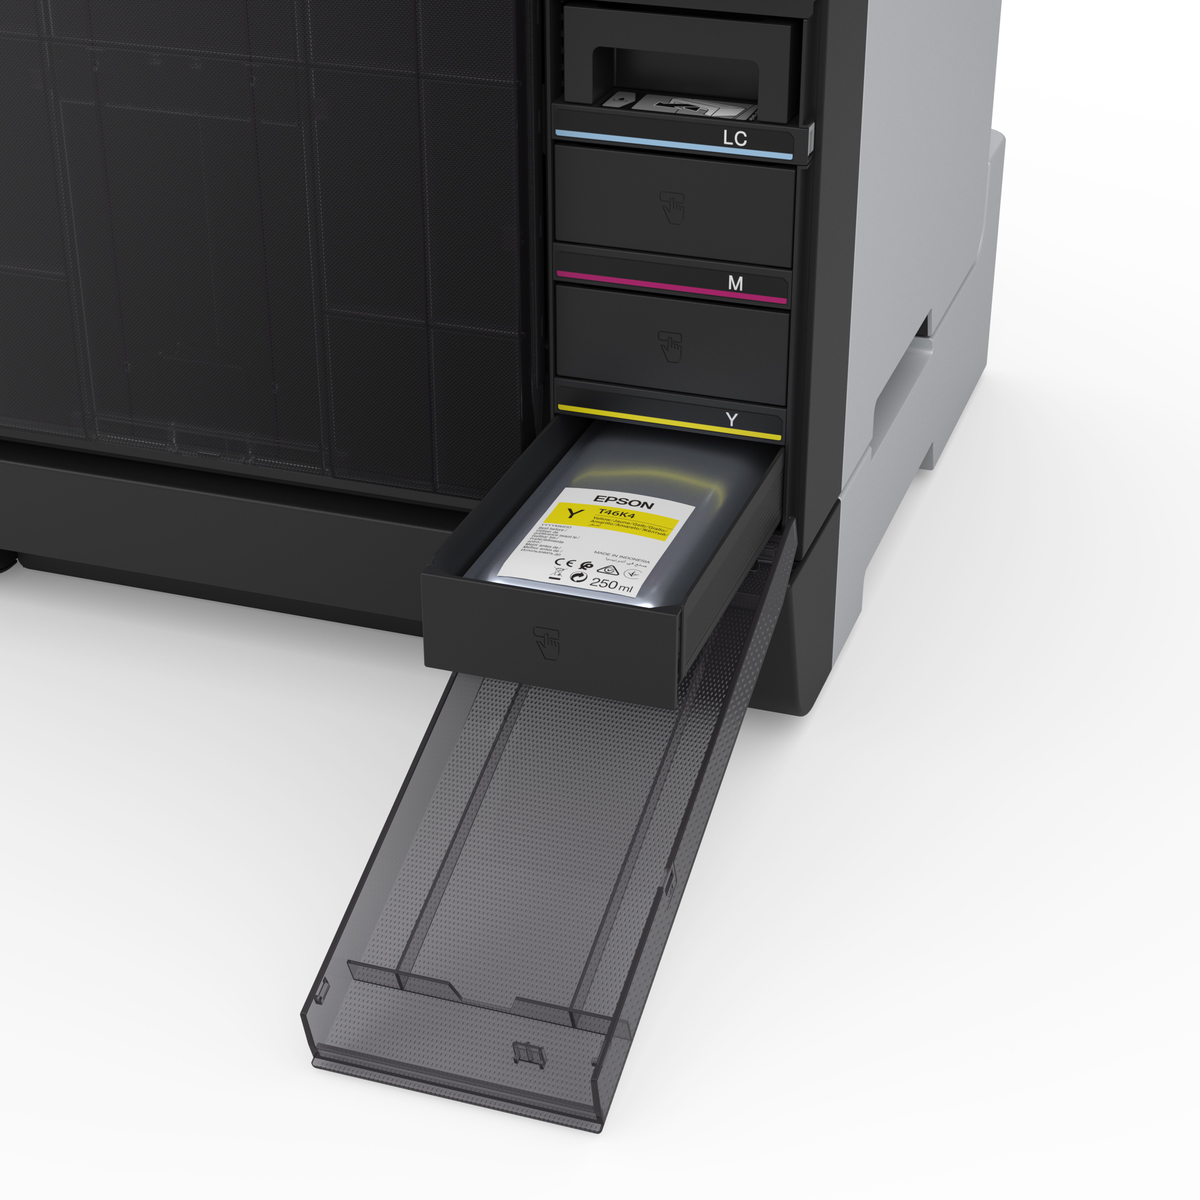 Epson SureLab SL-D1030 Professional Minilab Printer